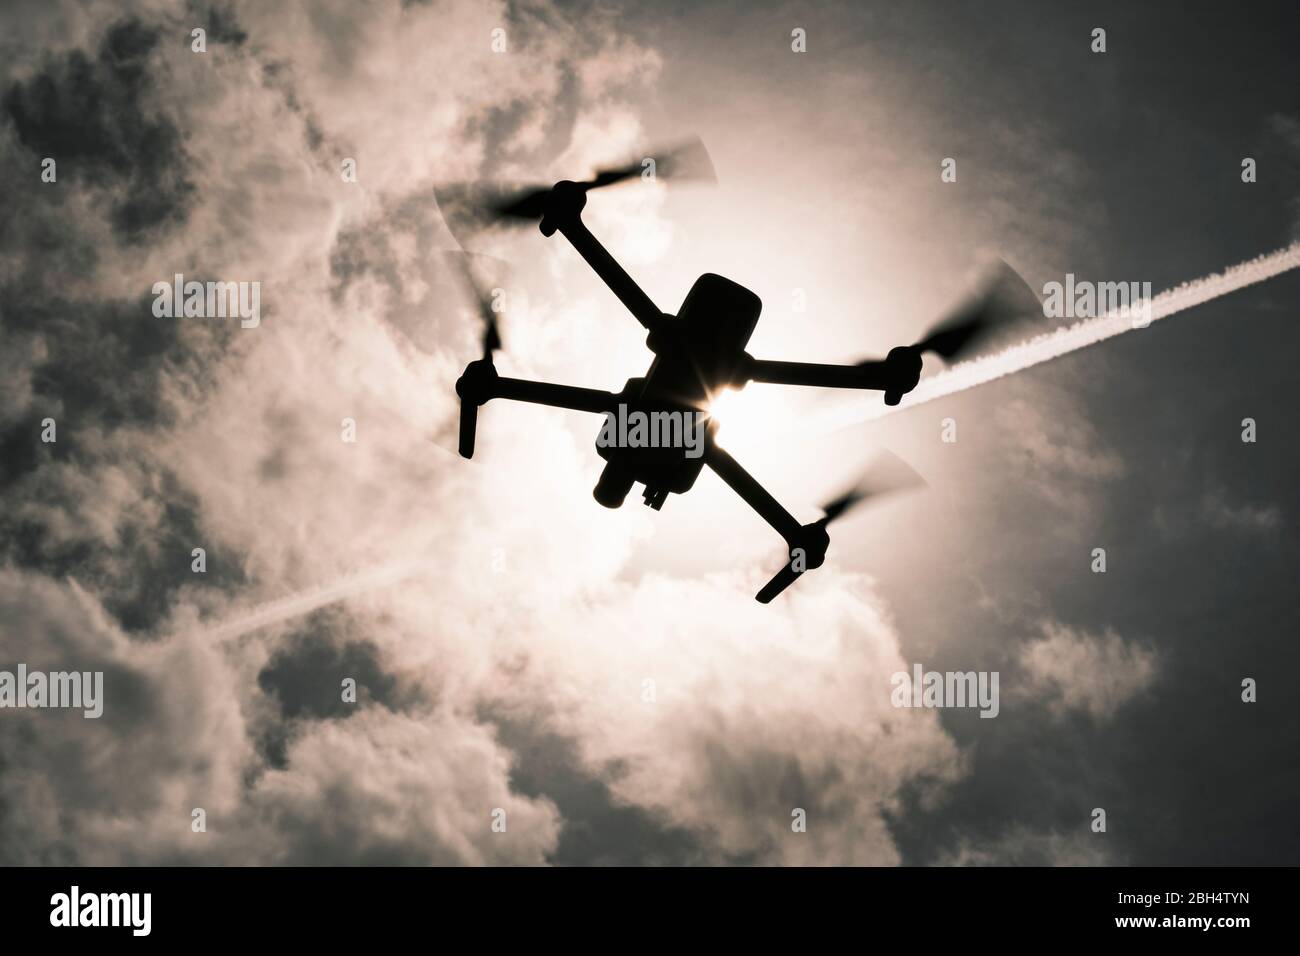 Drone flying in sky Stock Photo